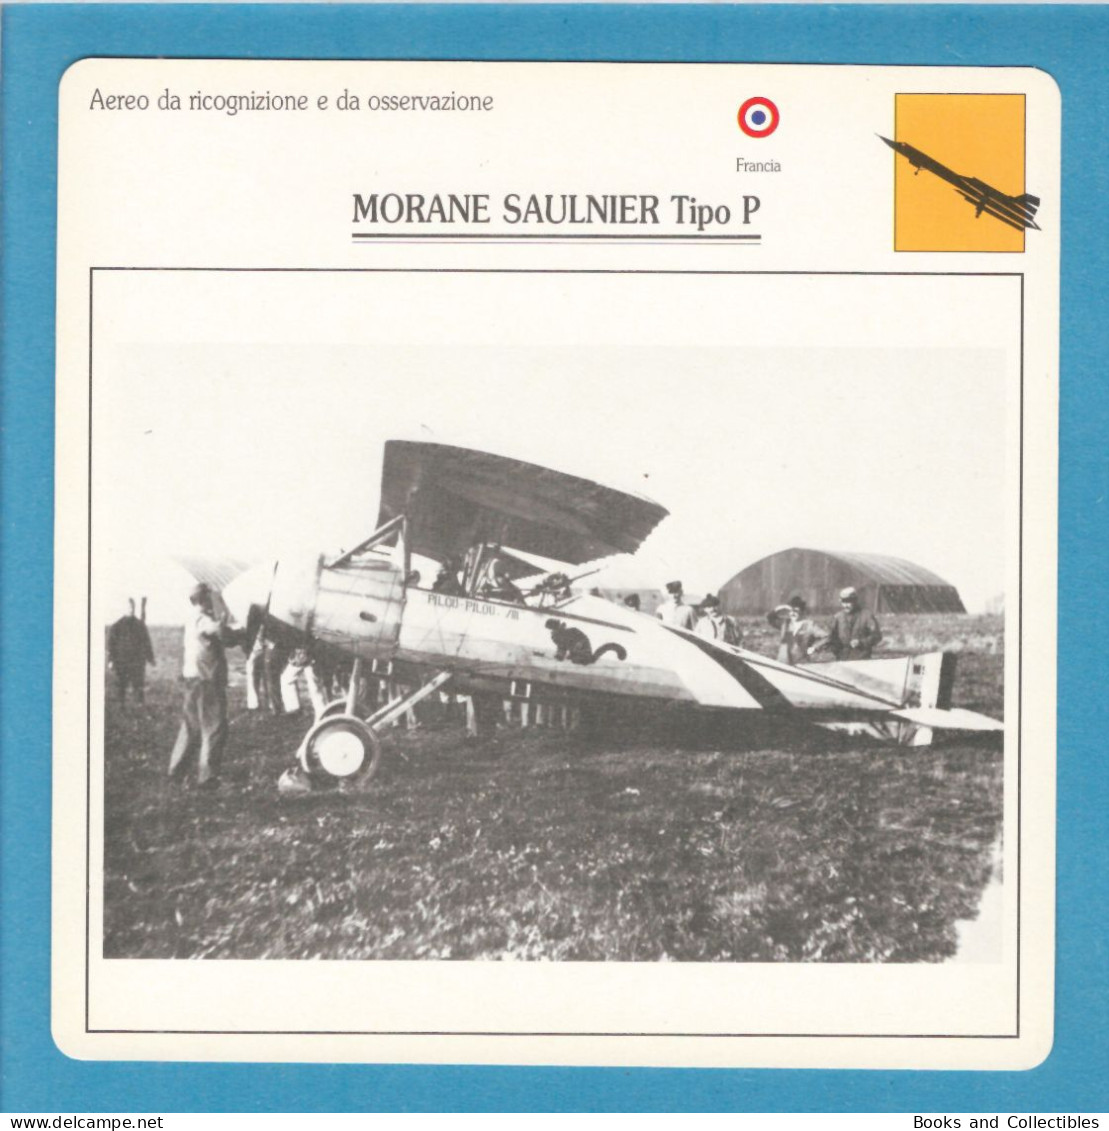 DeAgostini Educational Sheet "Warplanes" / MORANE SAULNIER Type P (France) - Aviation